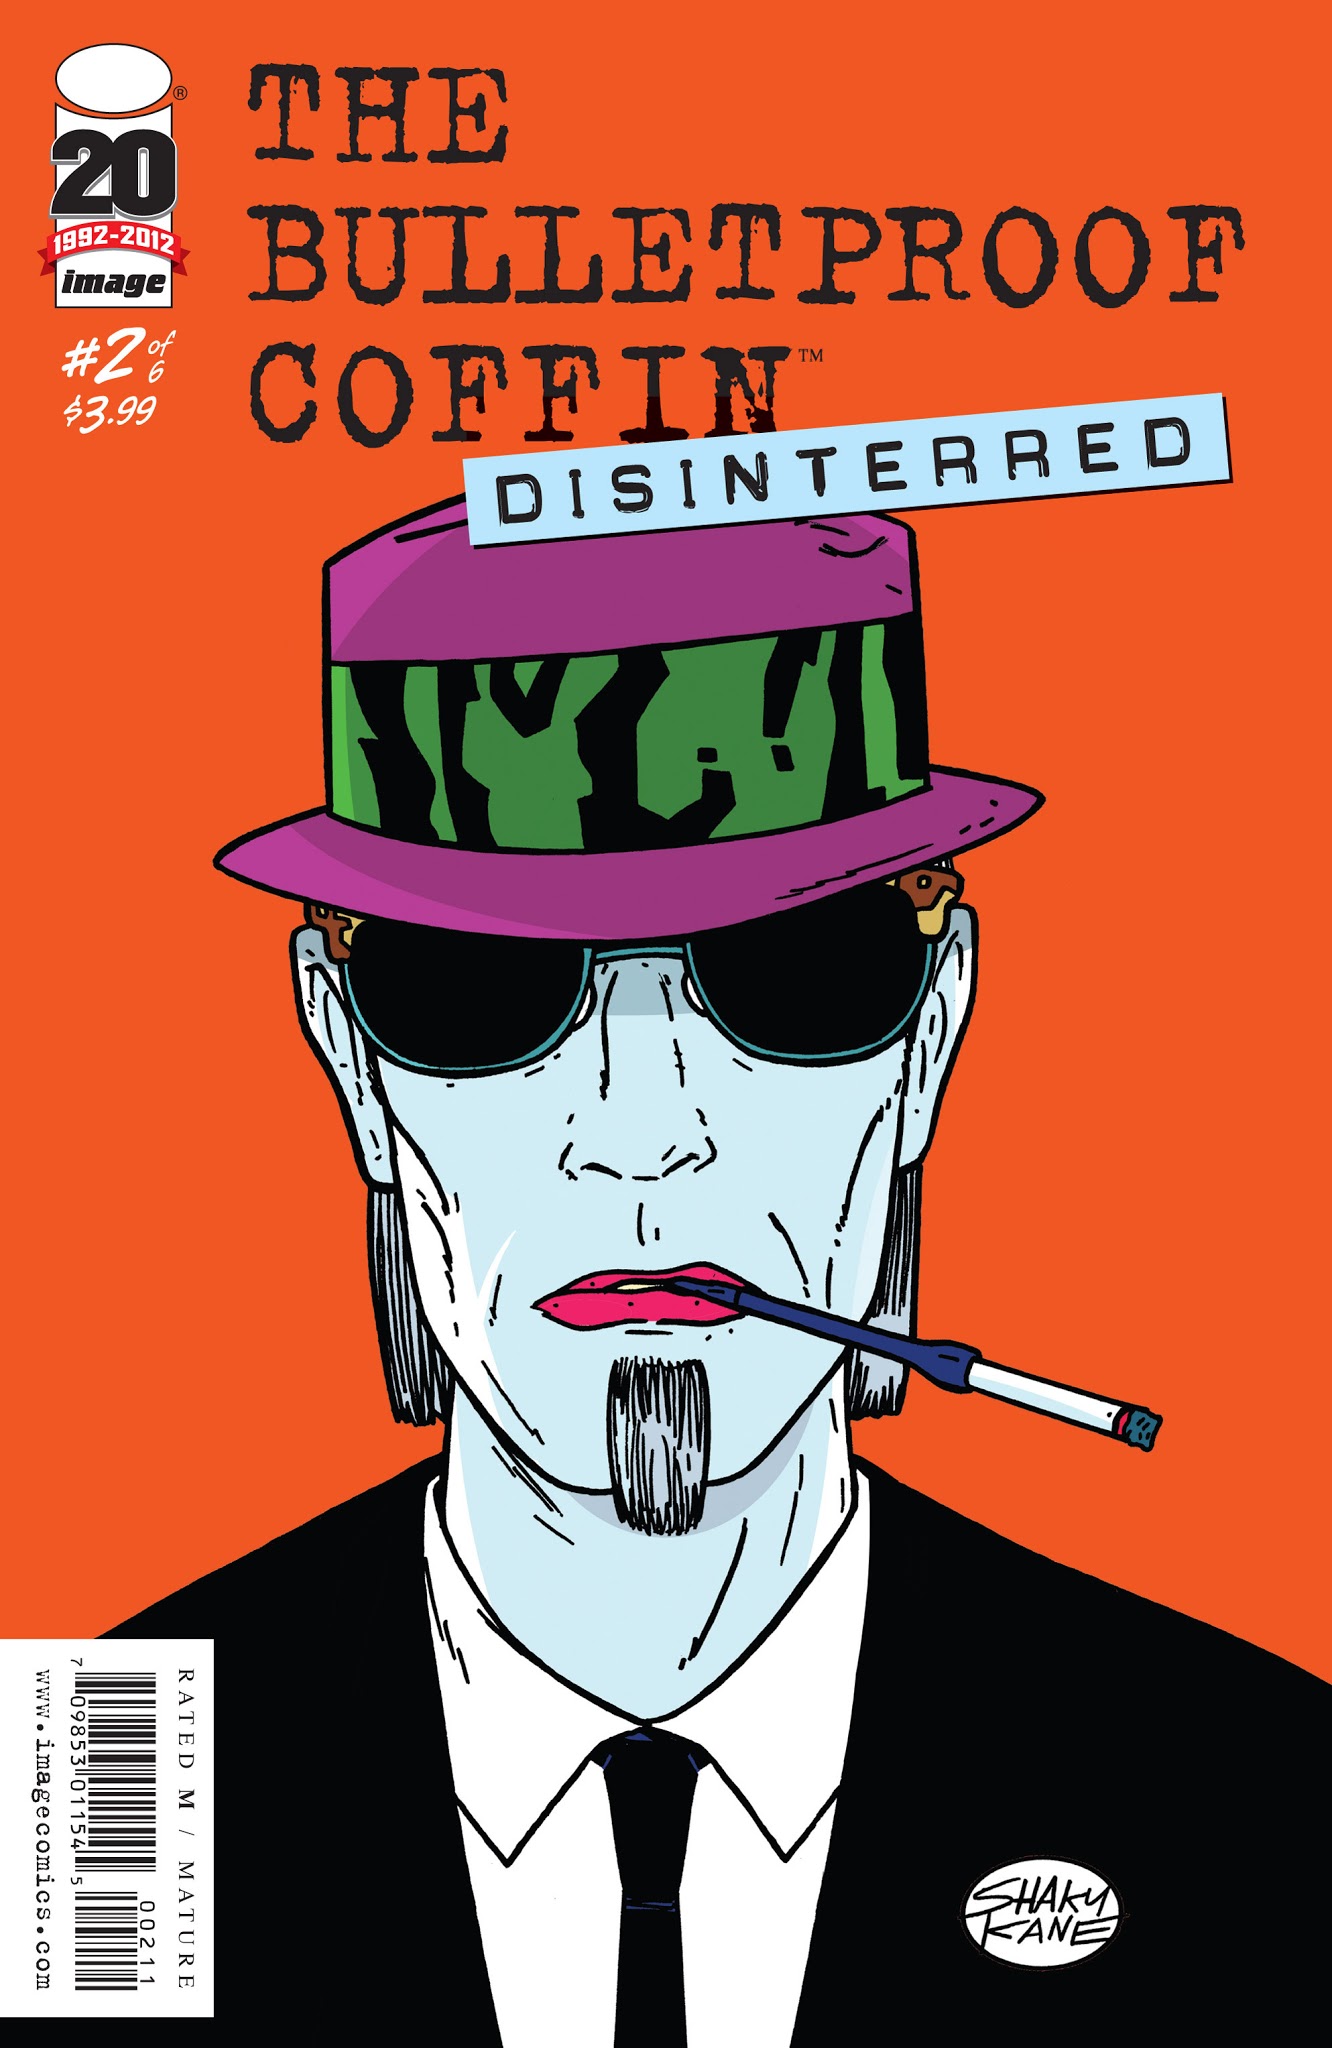 Read online Bulletproof Coffin: Disinterred comic -  Issue #2 - 1